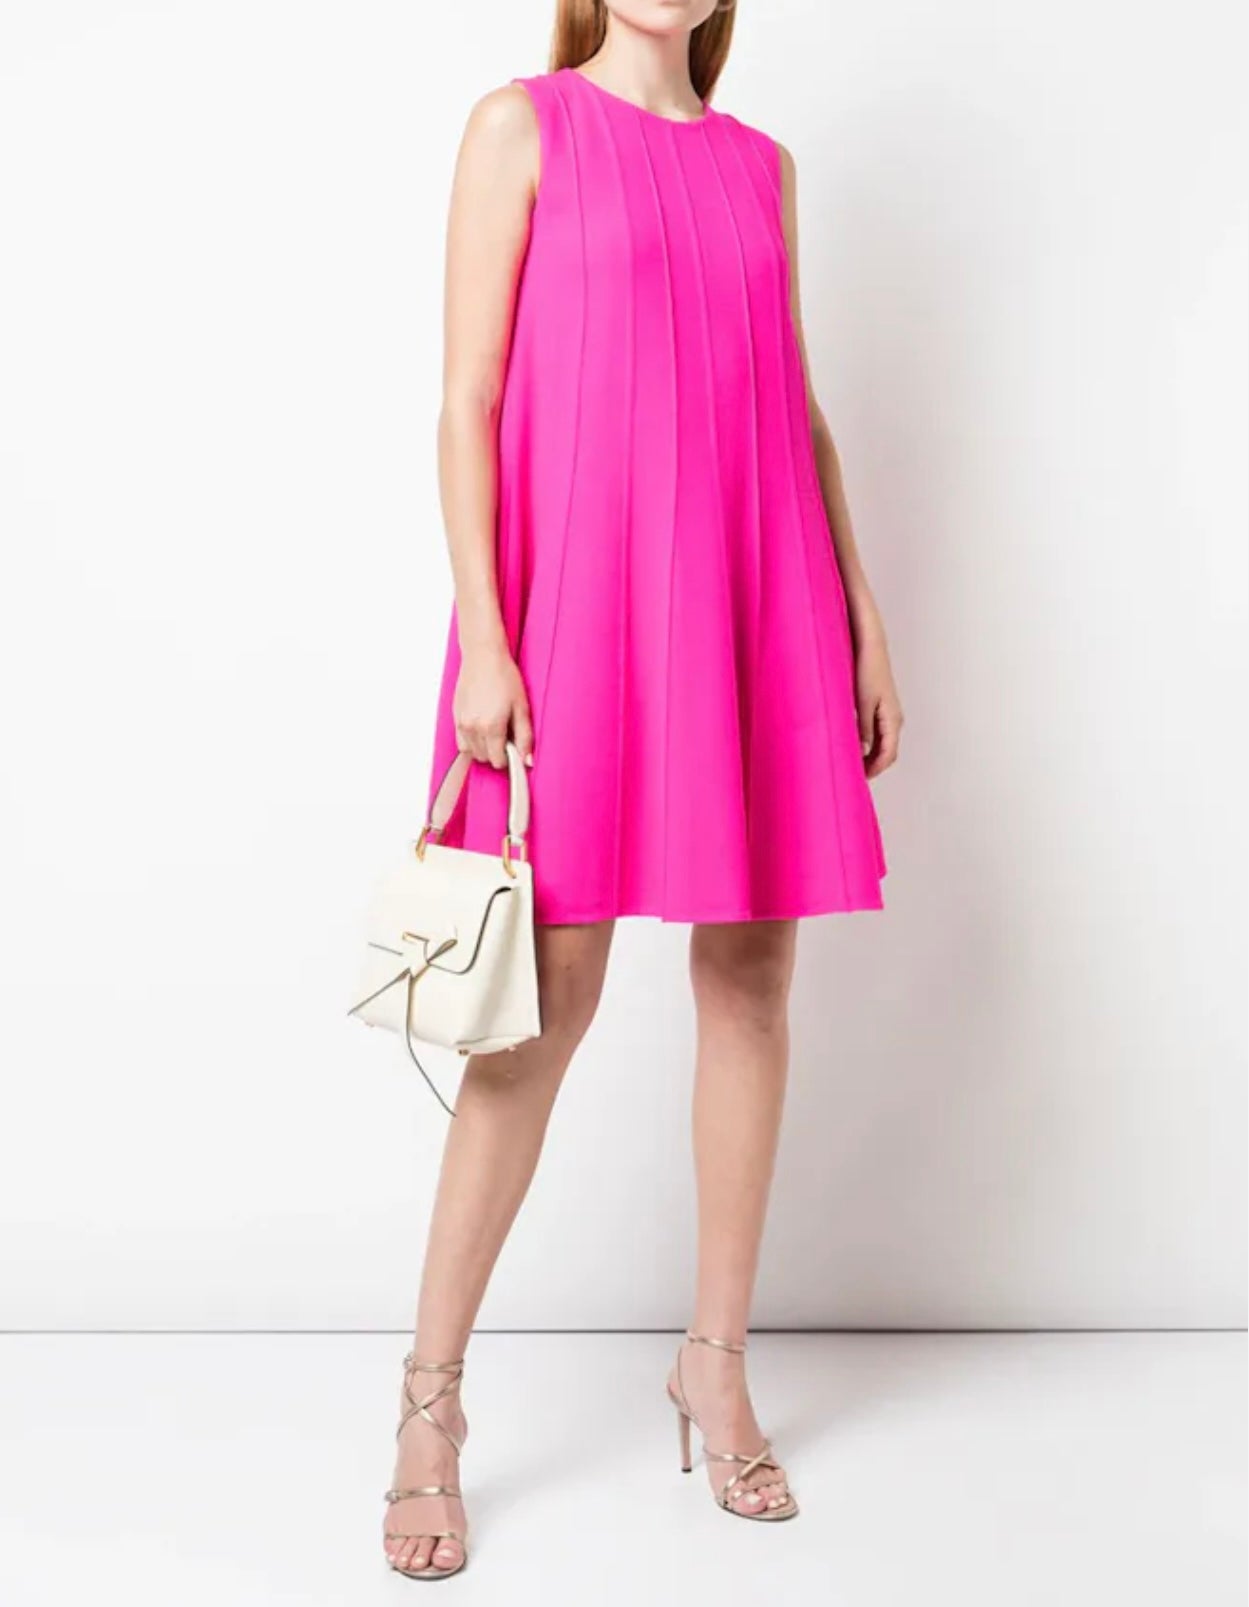 Oscar de la Renta - Hot Pink Pleated Dress